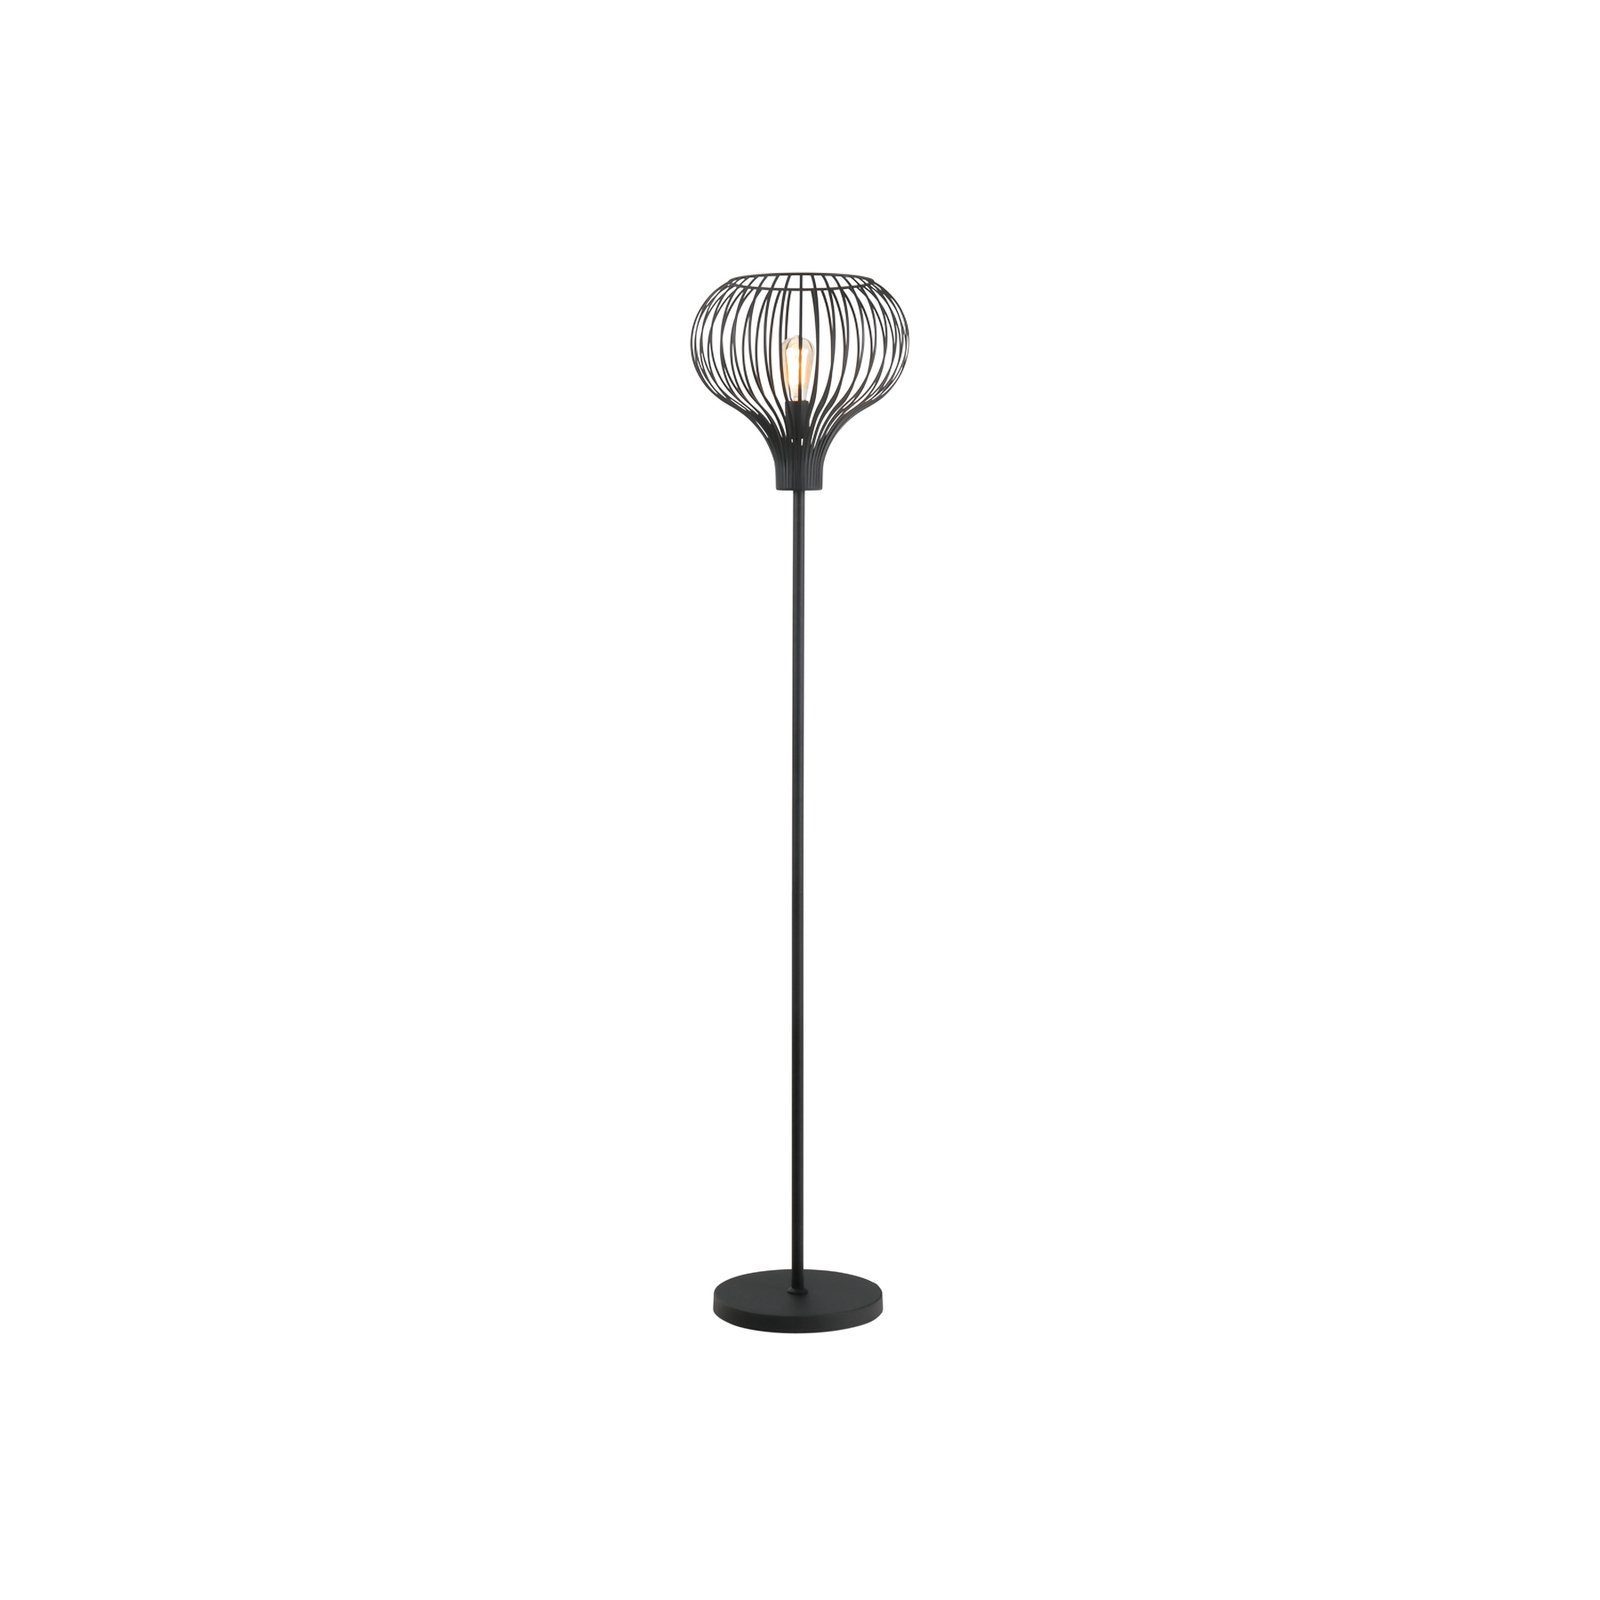 Aglio gulvlampe, høyde 180 cm, svart, metall